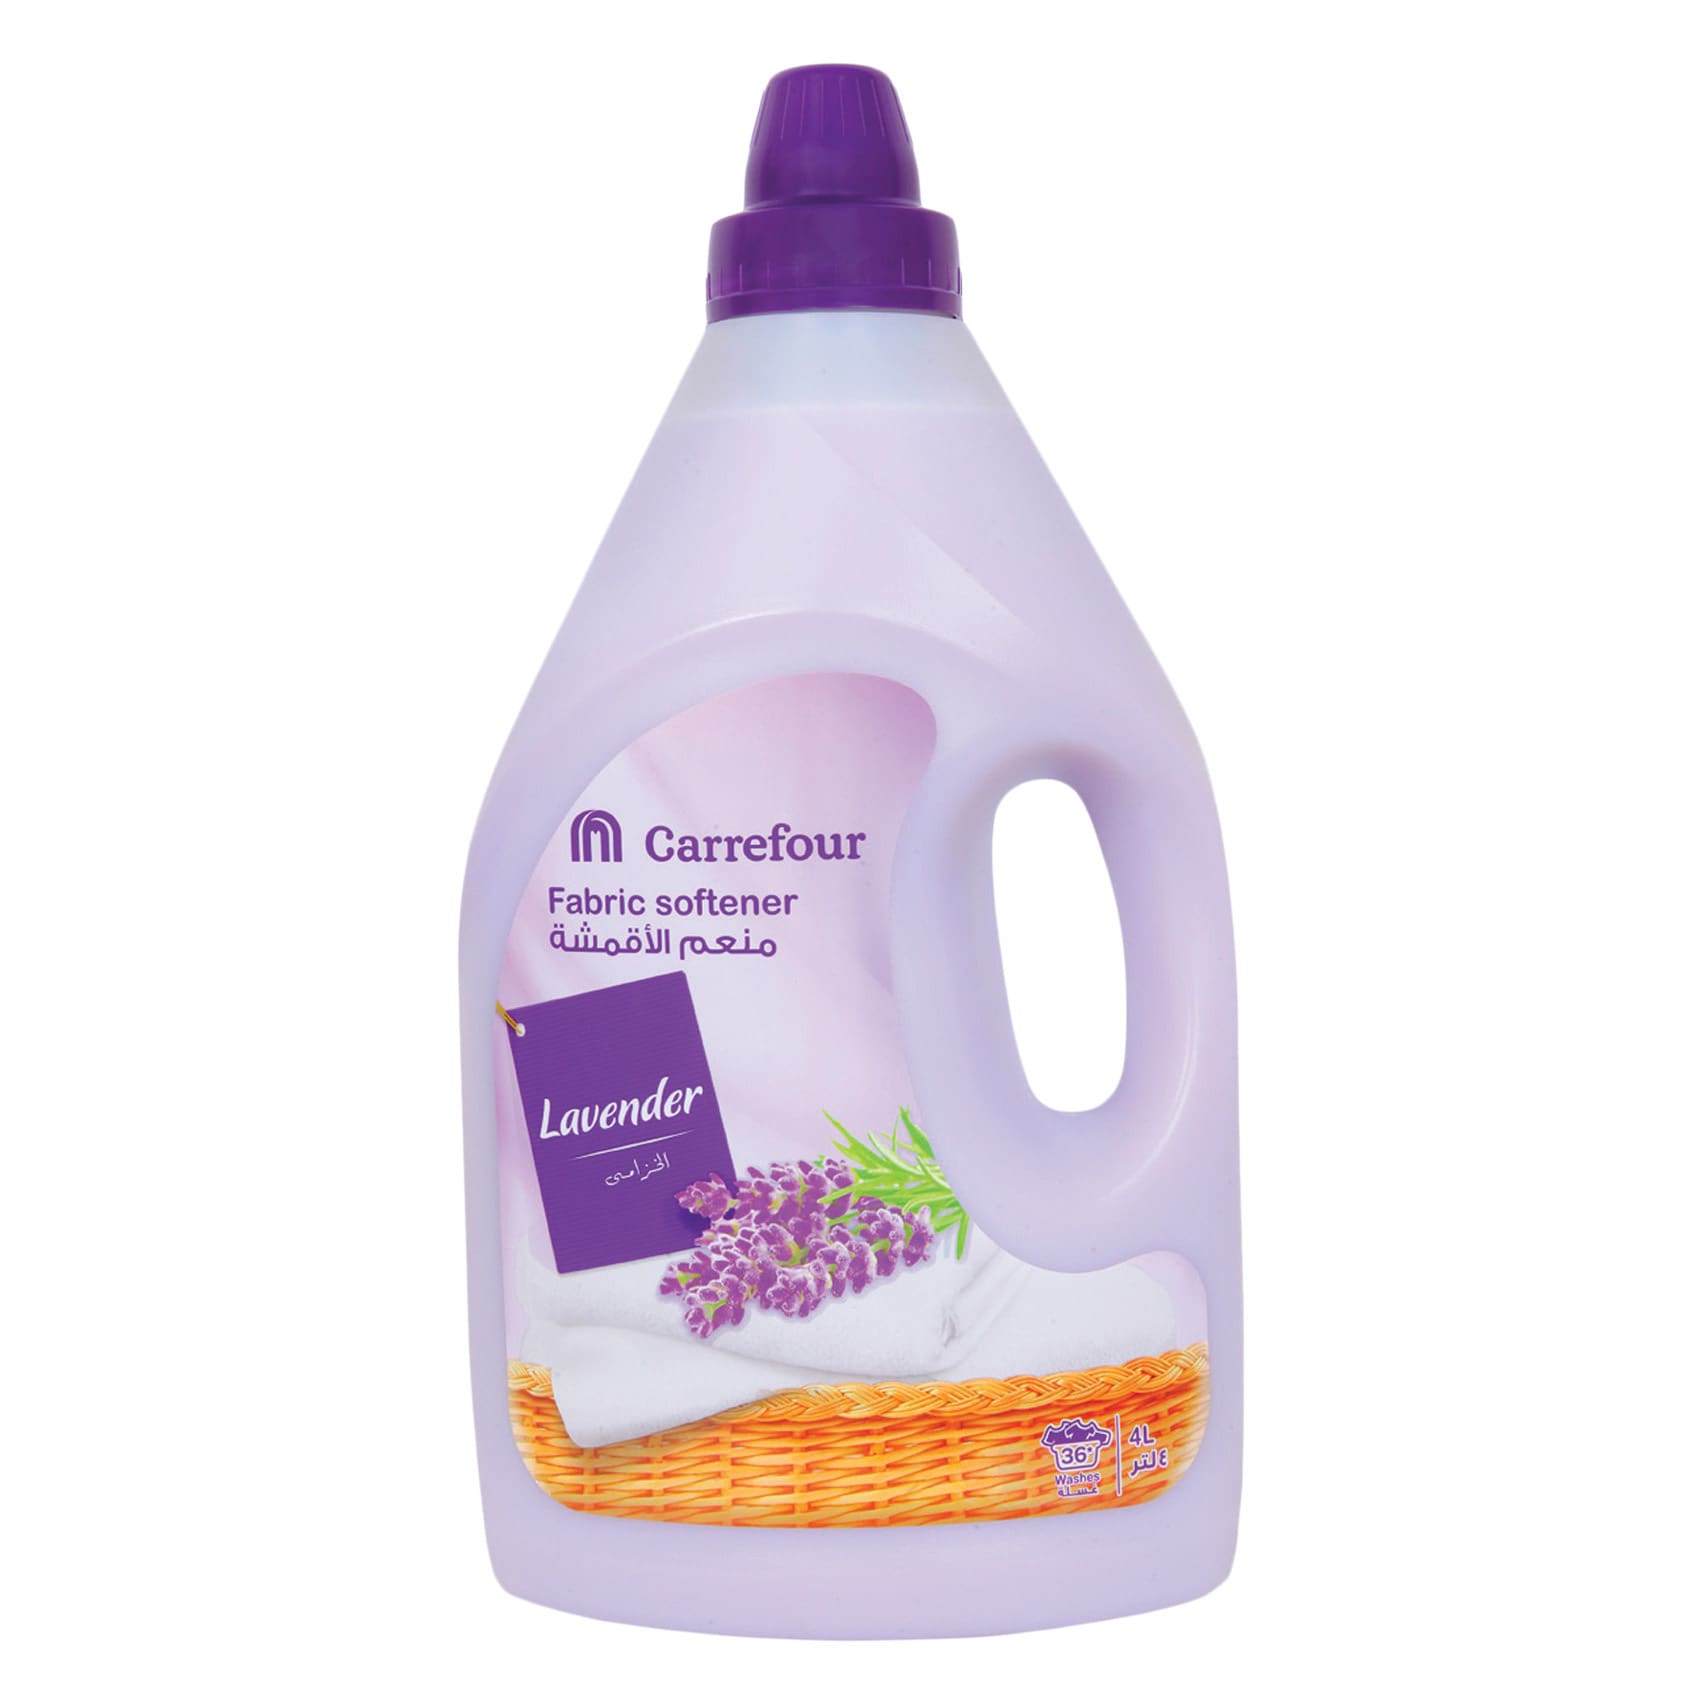 Buy Carrefour fabric softener lavendar 4L Online - Shop Cleaning